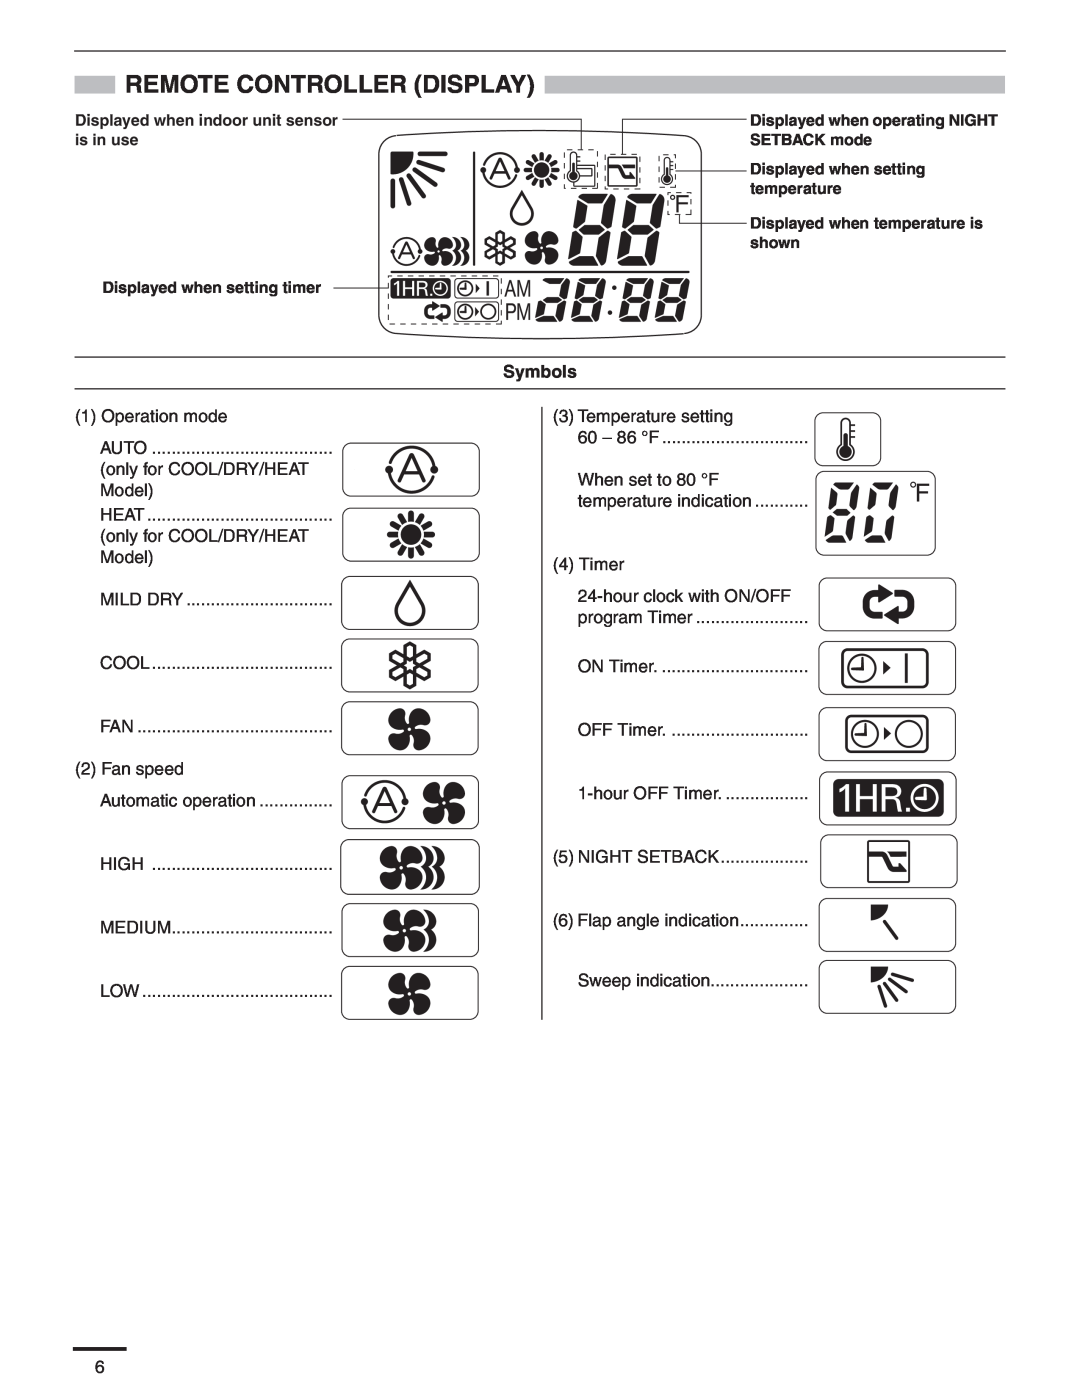 Panasonic CU-KS18NKUA, CU-KS12NK1A Remote Controller Display, Symbols, 1Operation mode AUTO only for COOL/DRY/HEAT Model 